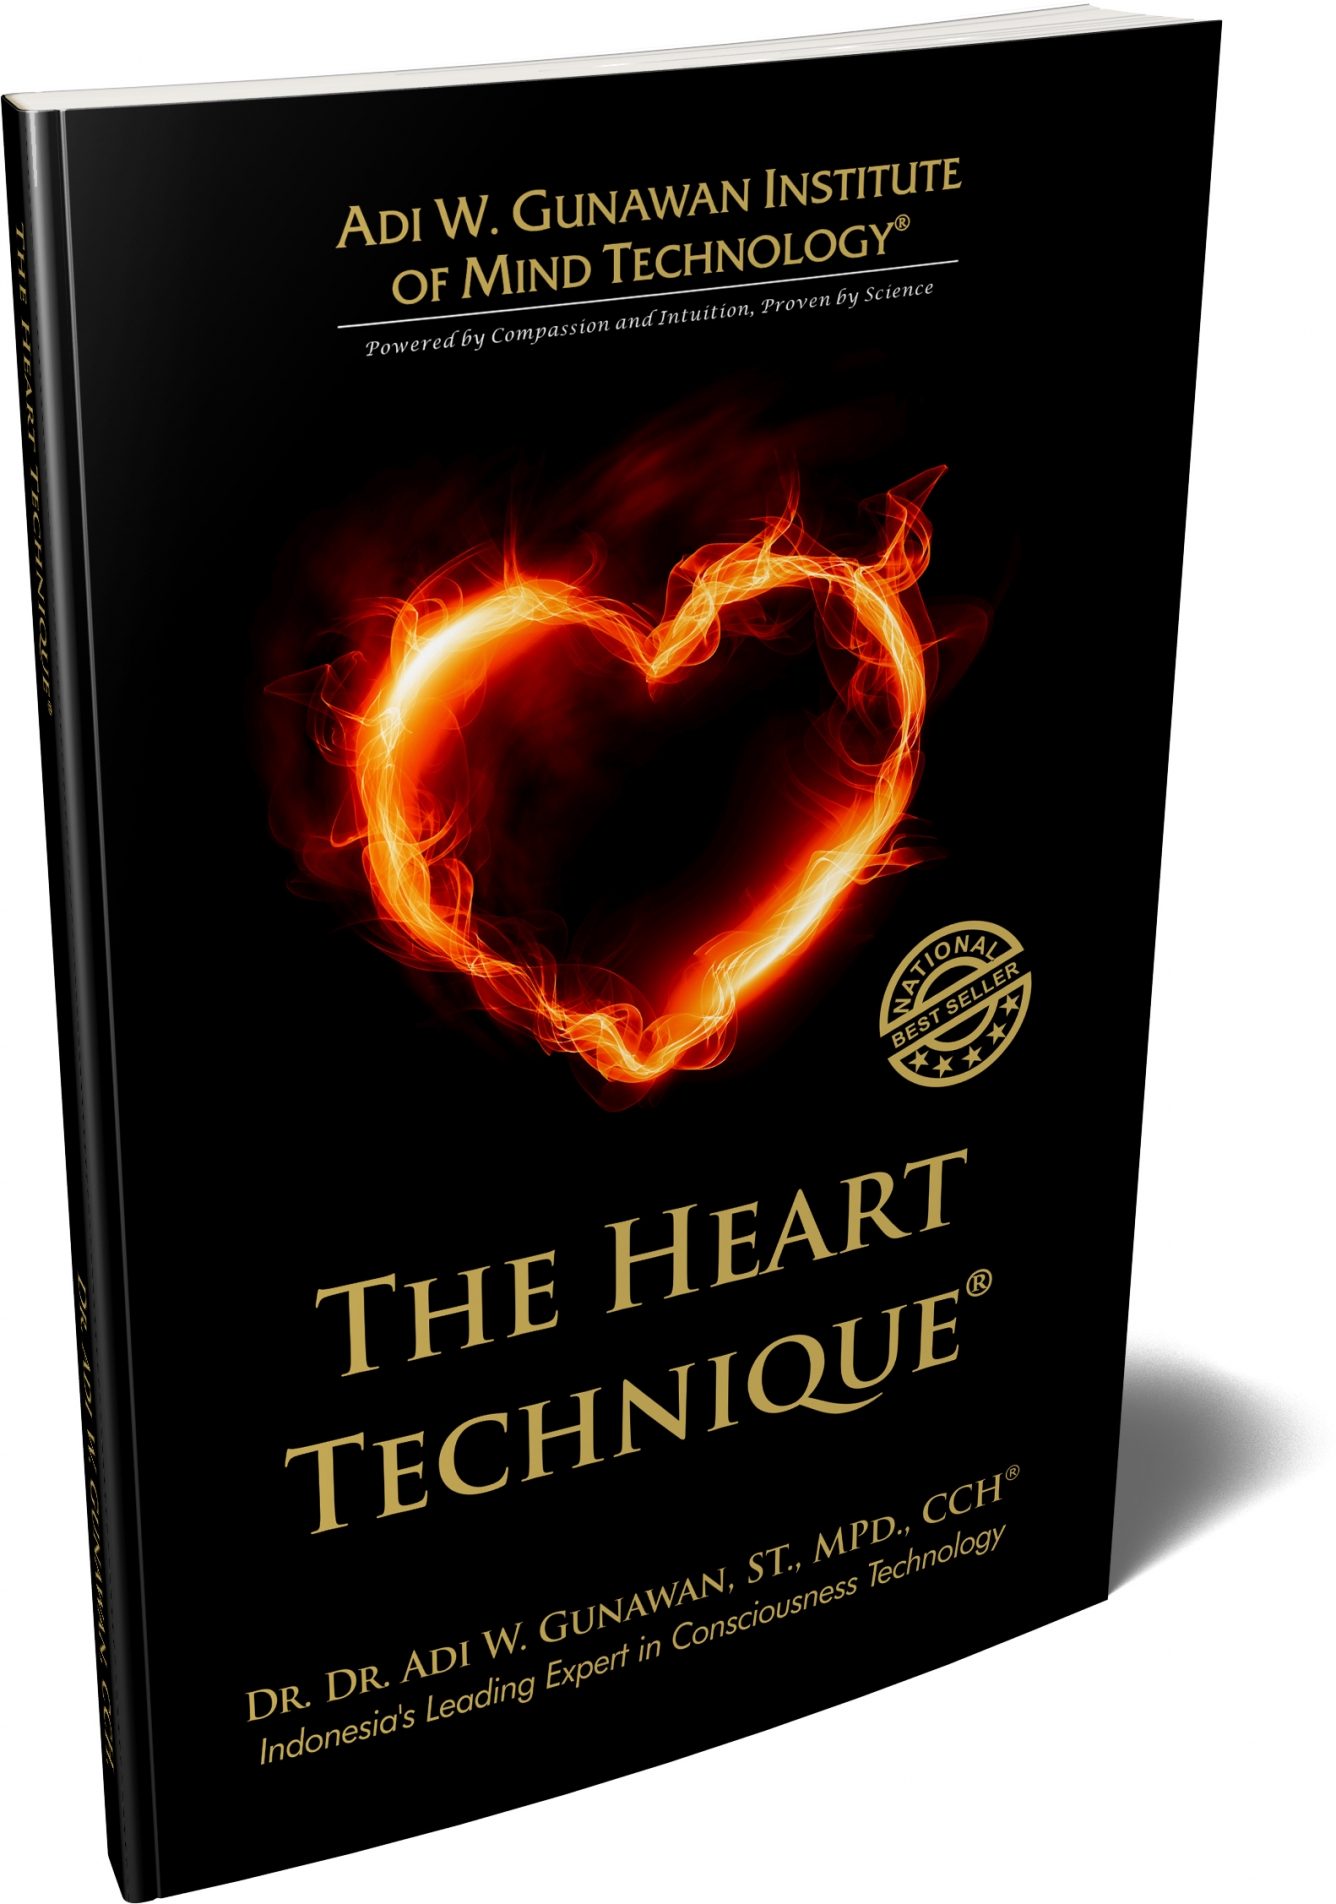 The Heart Technique